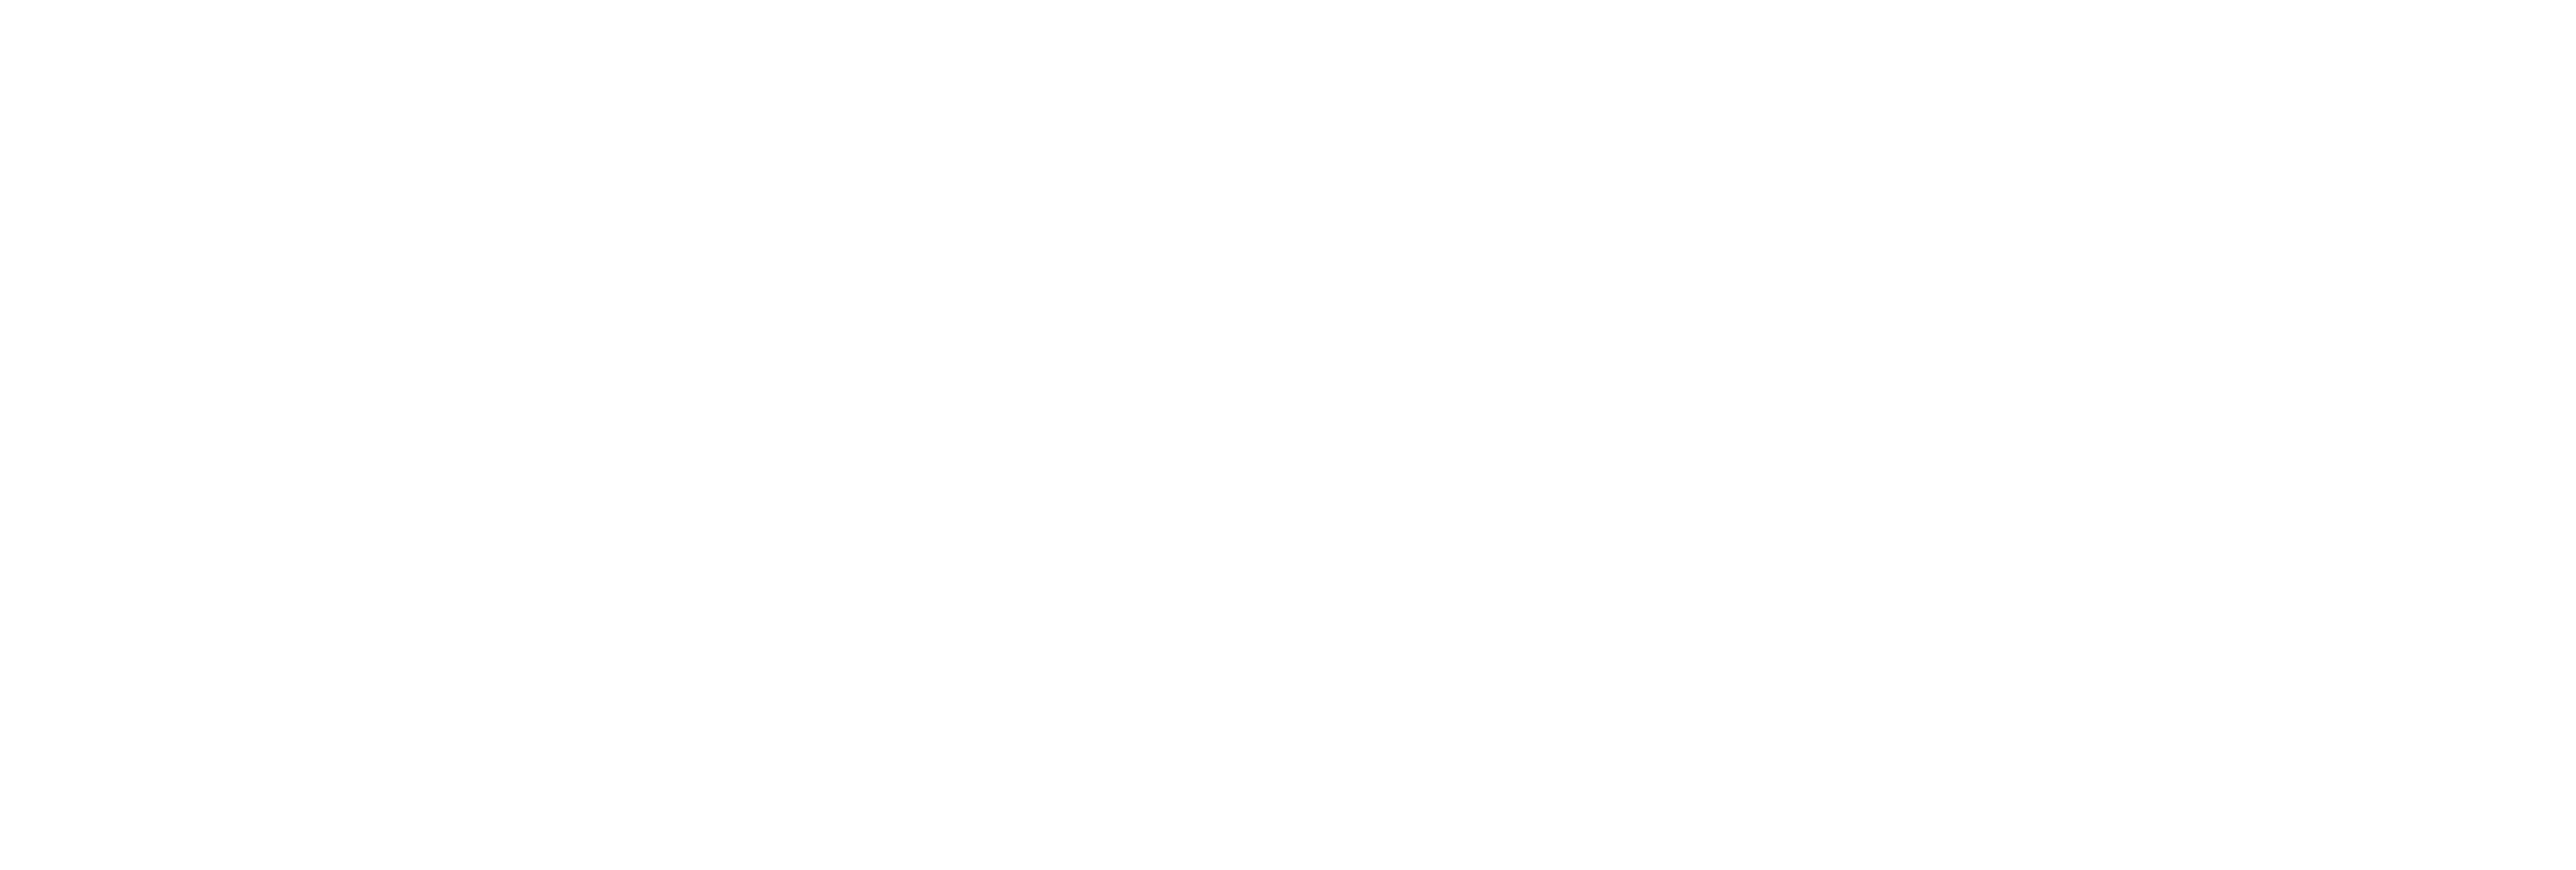 AniCura Dyresykehus Sørlandet logo